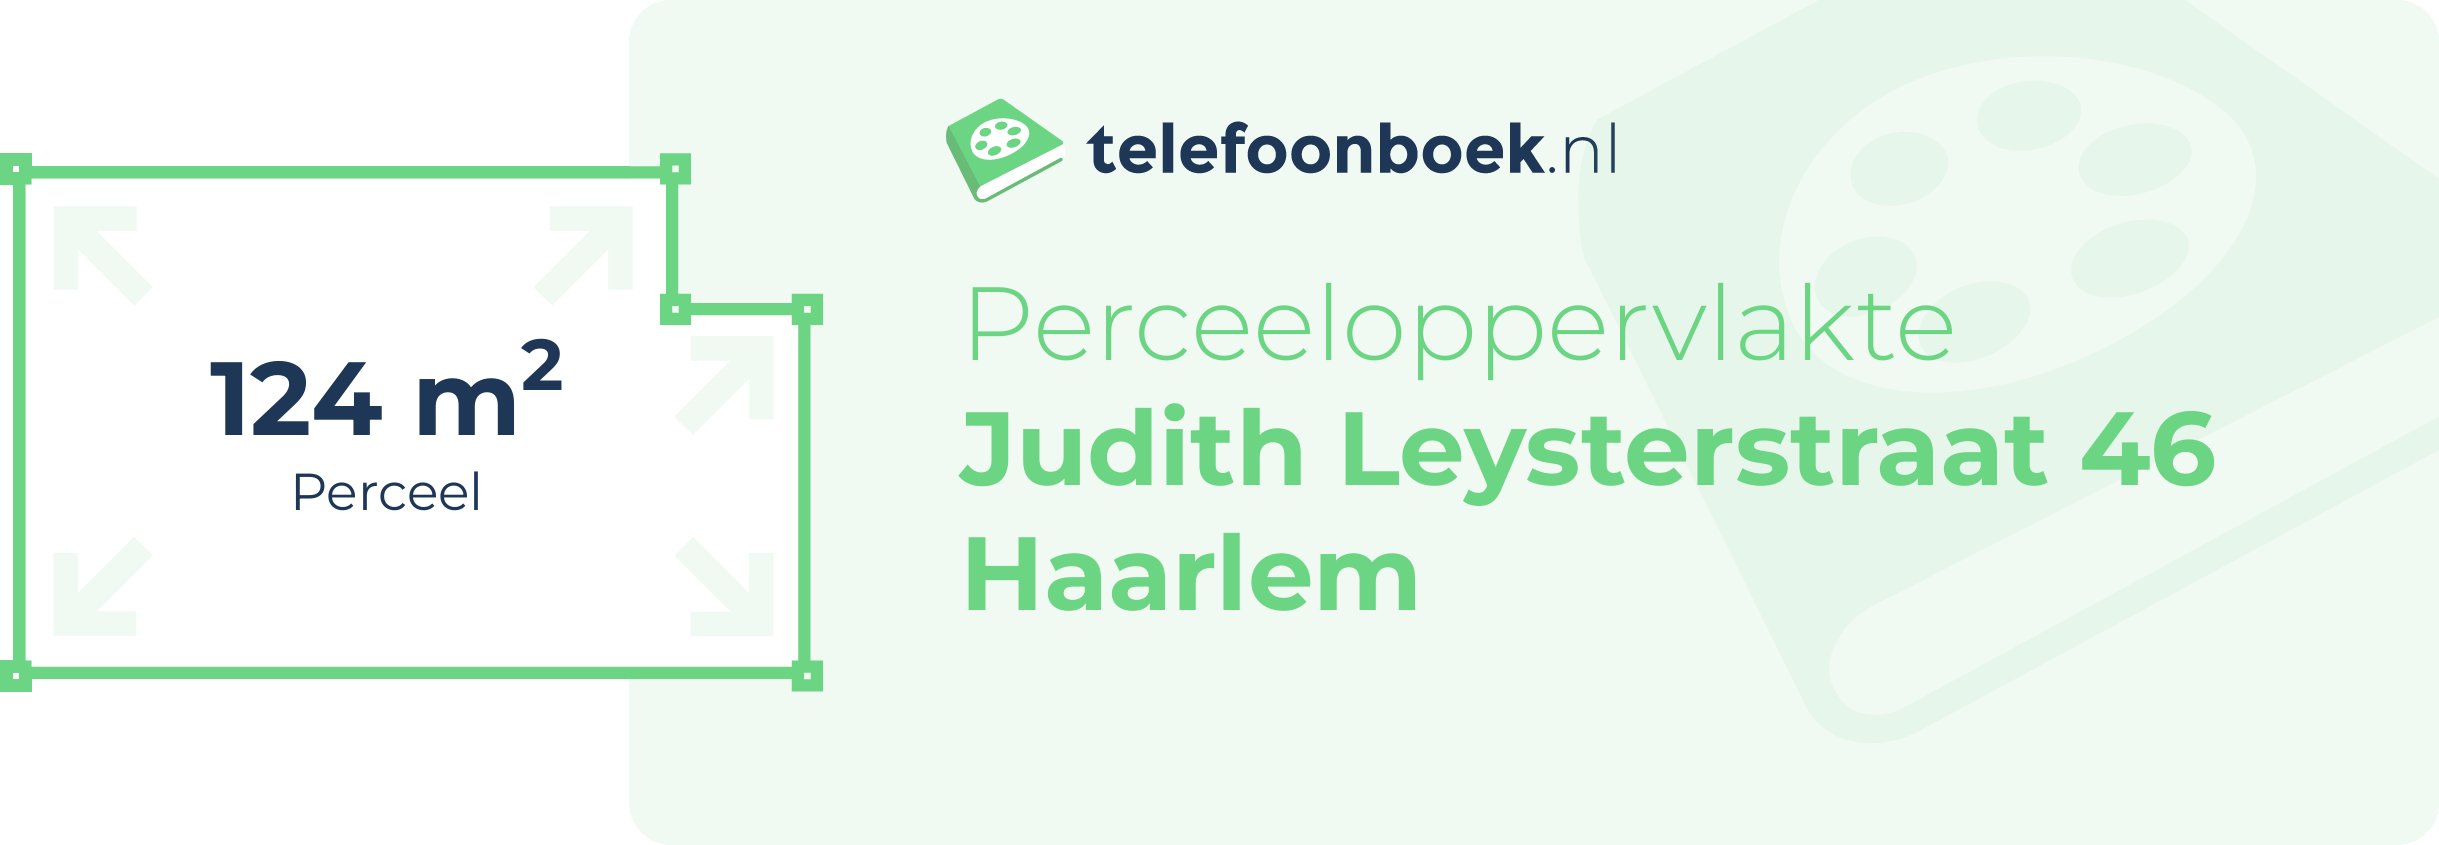 Perceeloppervlakte Judith Leysterstraat 46 Haarlem